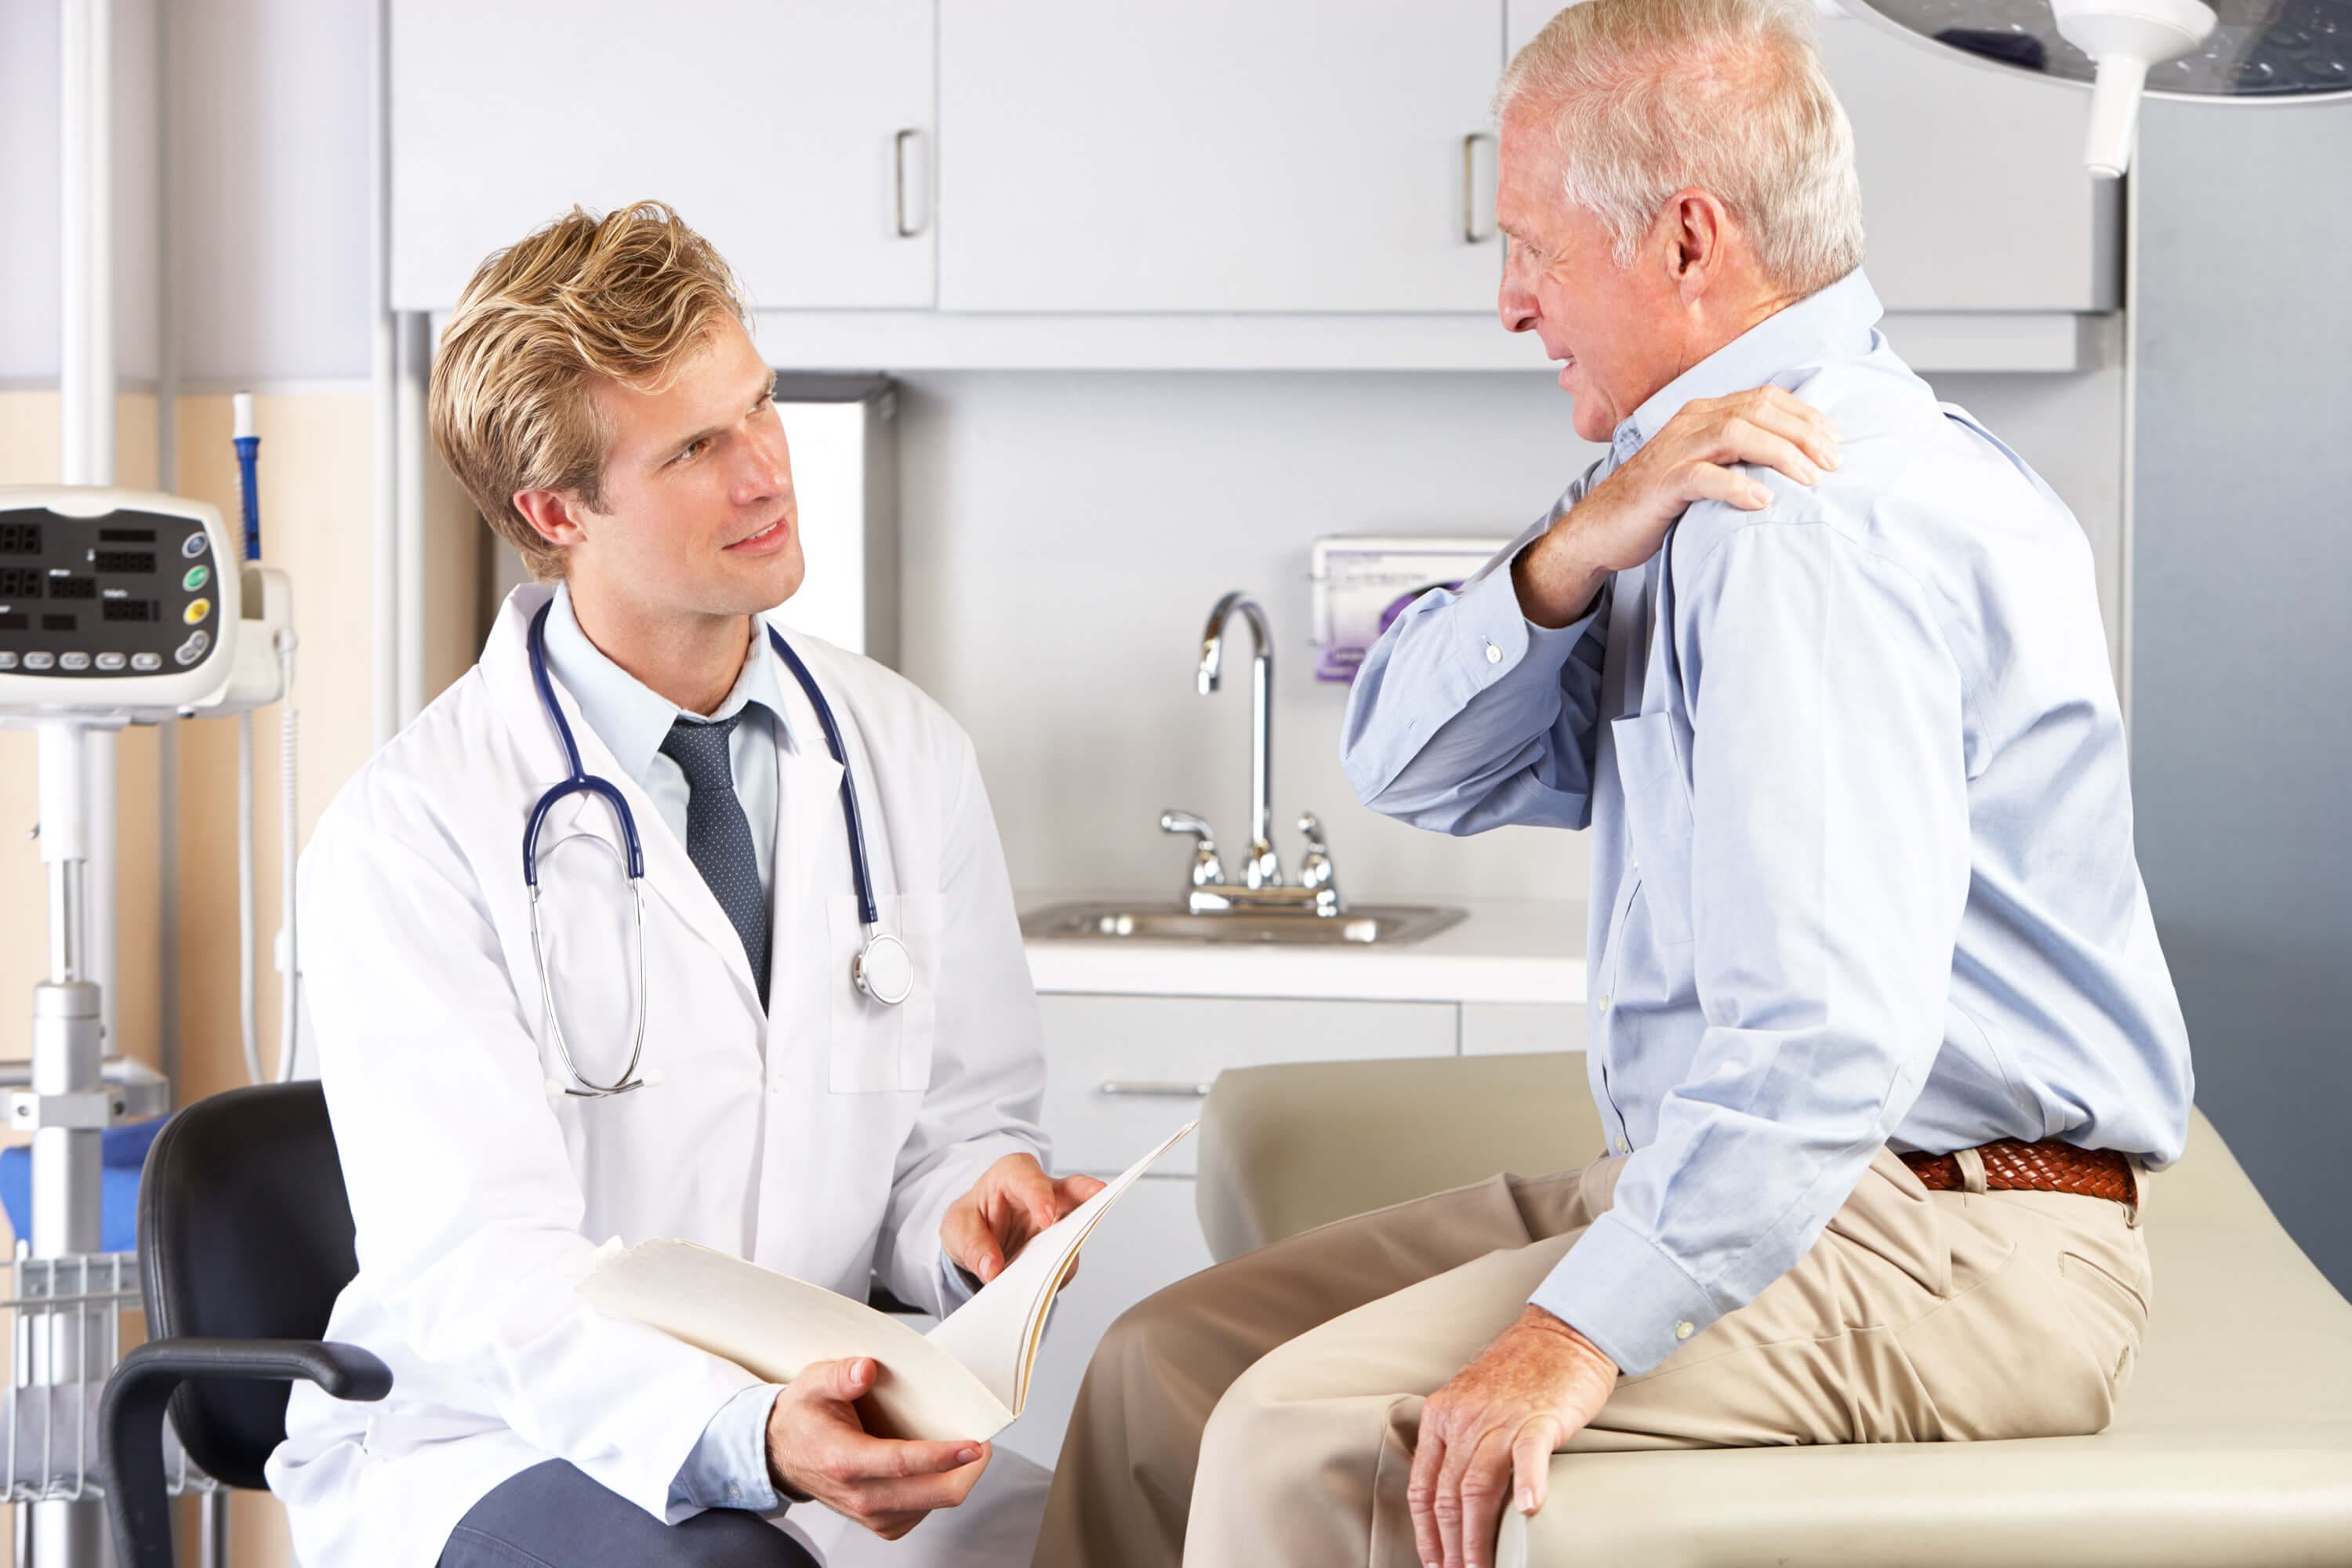 Older male patient visits healthcare professional for shoulder pain.